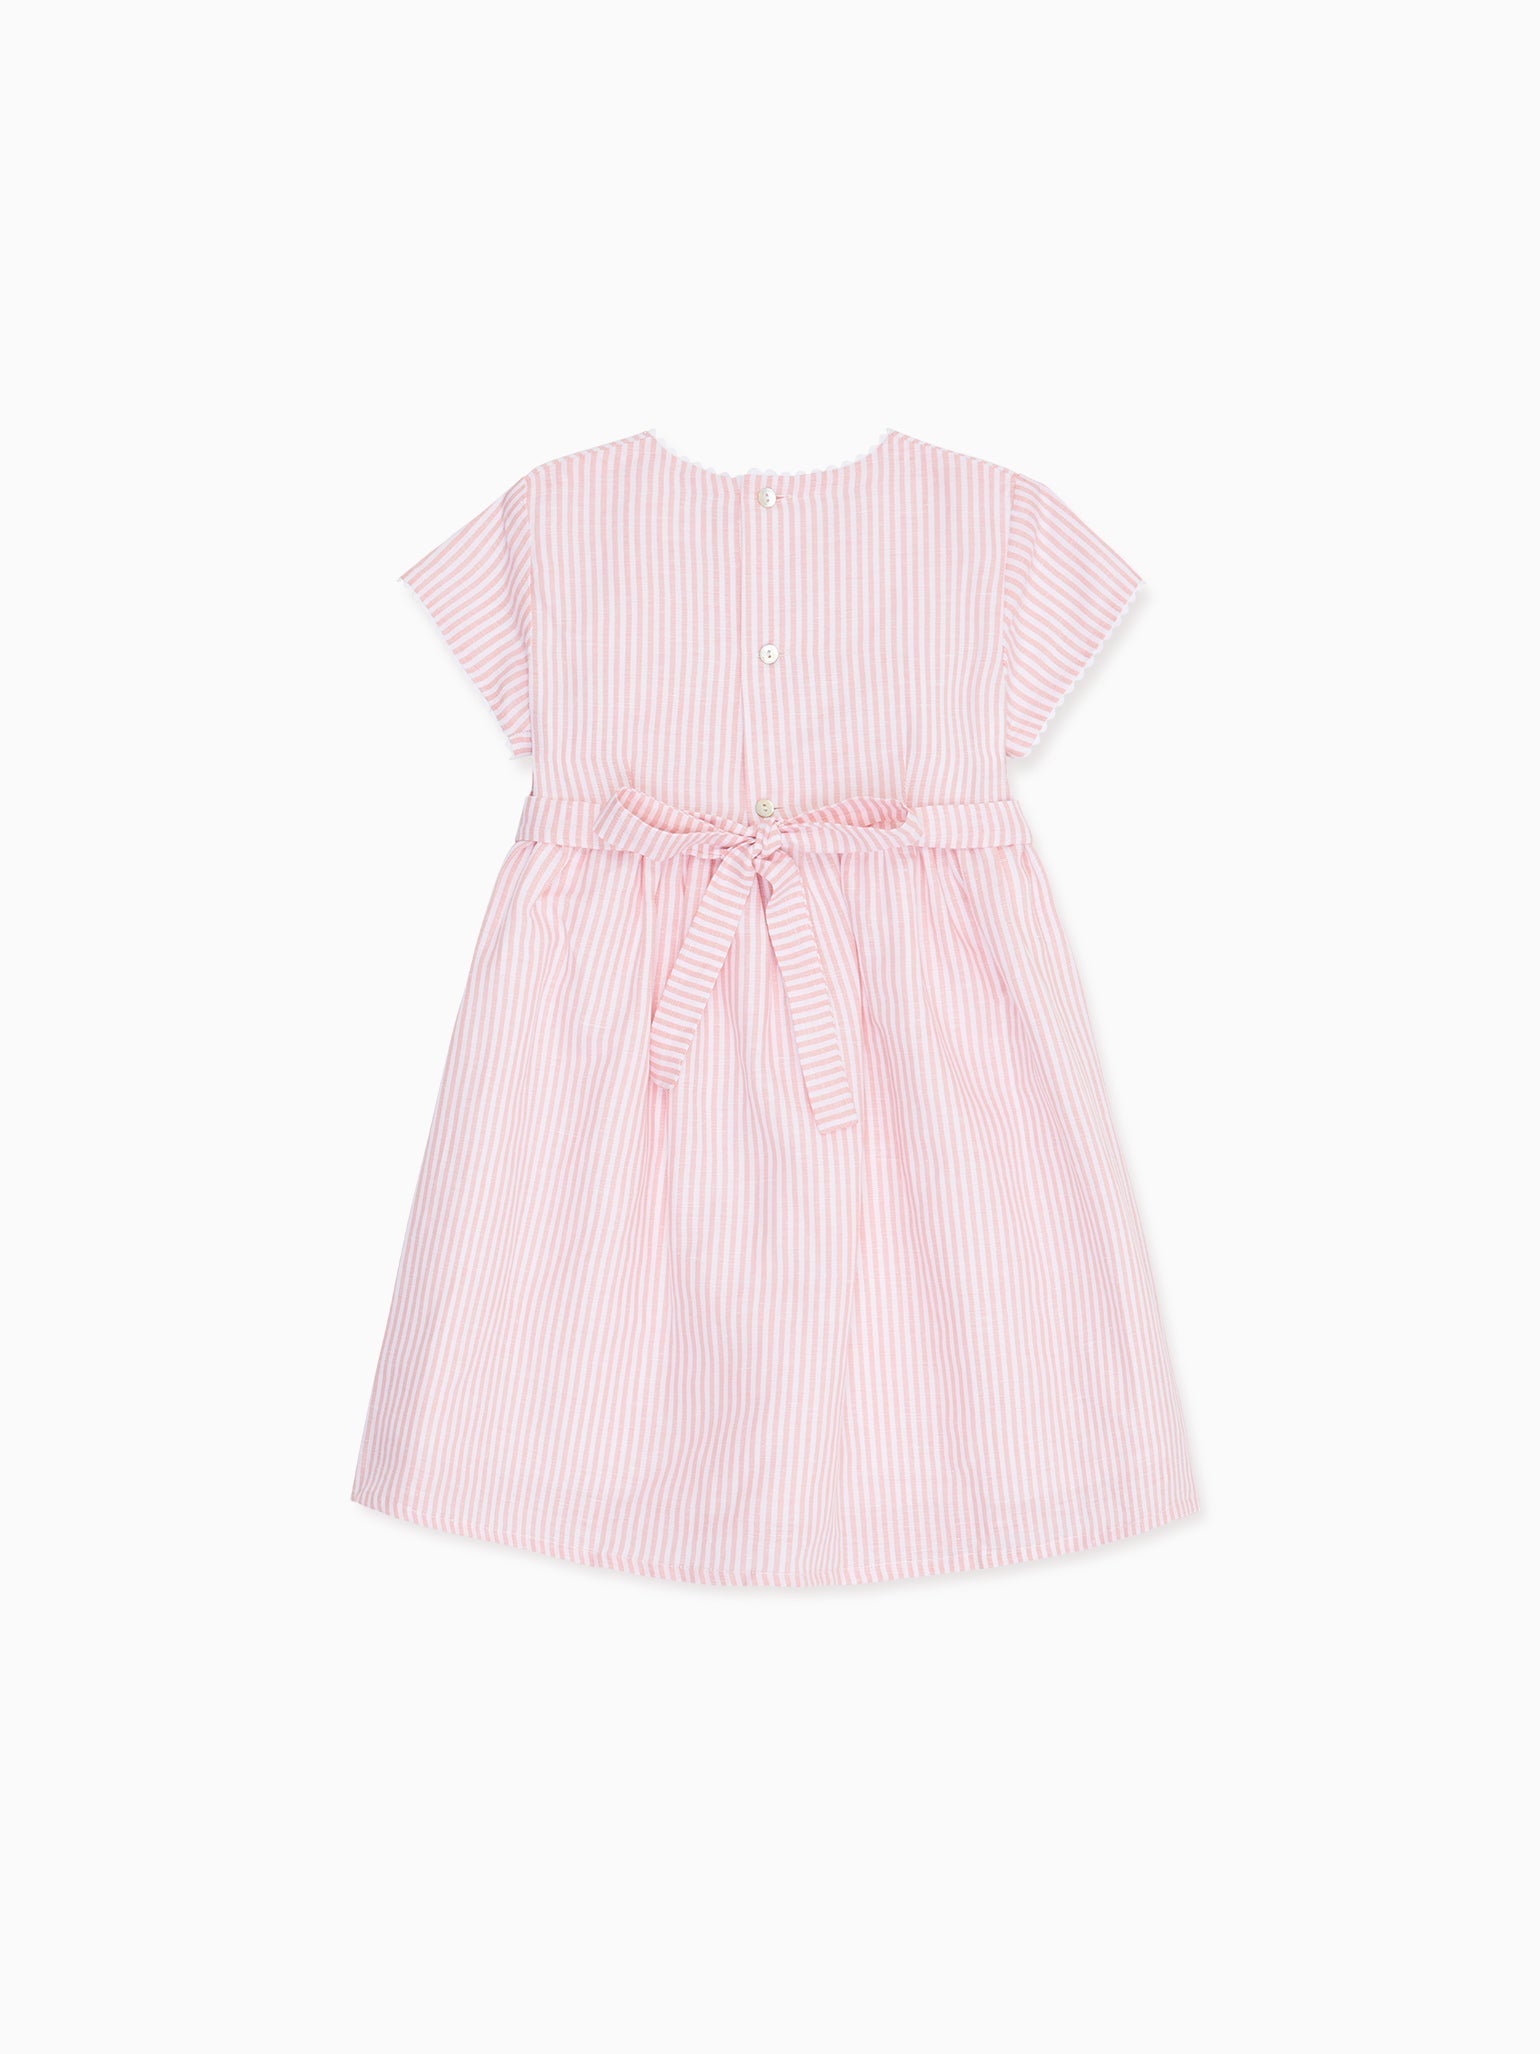 Pink Stripe Ava Girl Hand-Smocked Dress